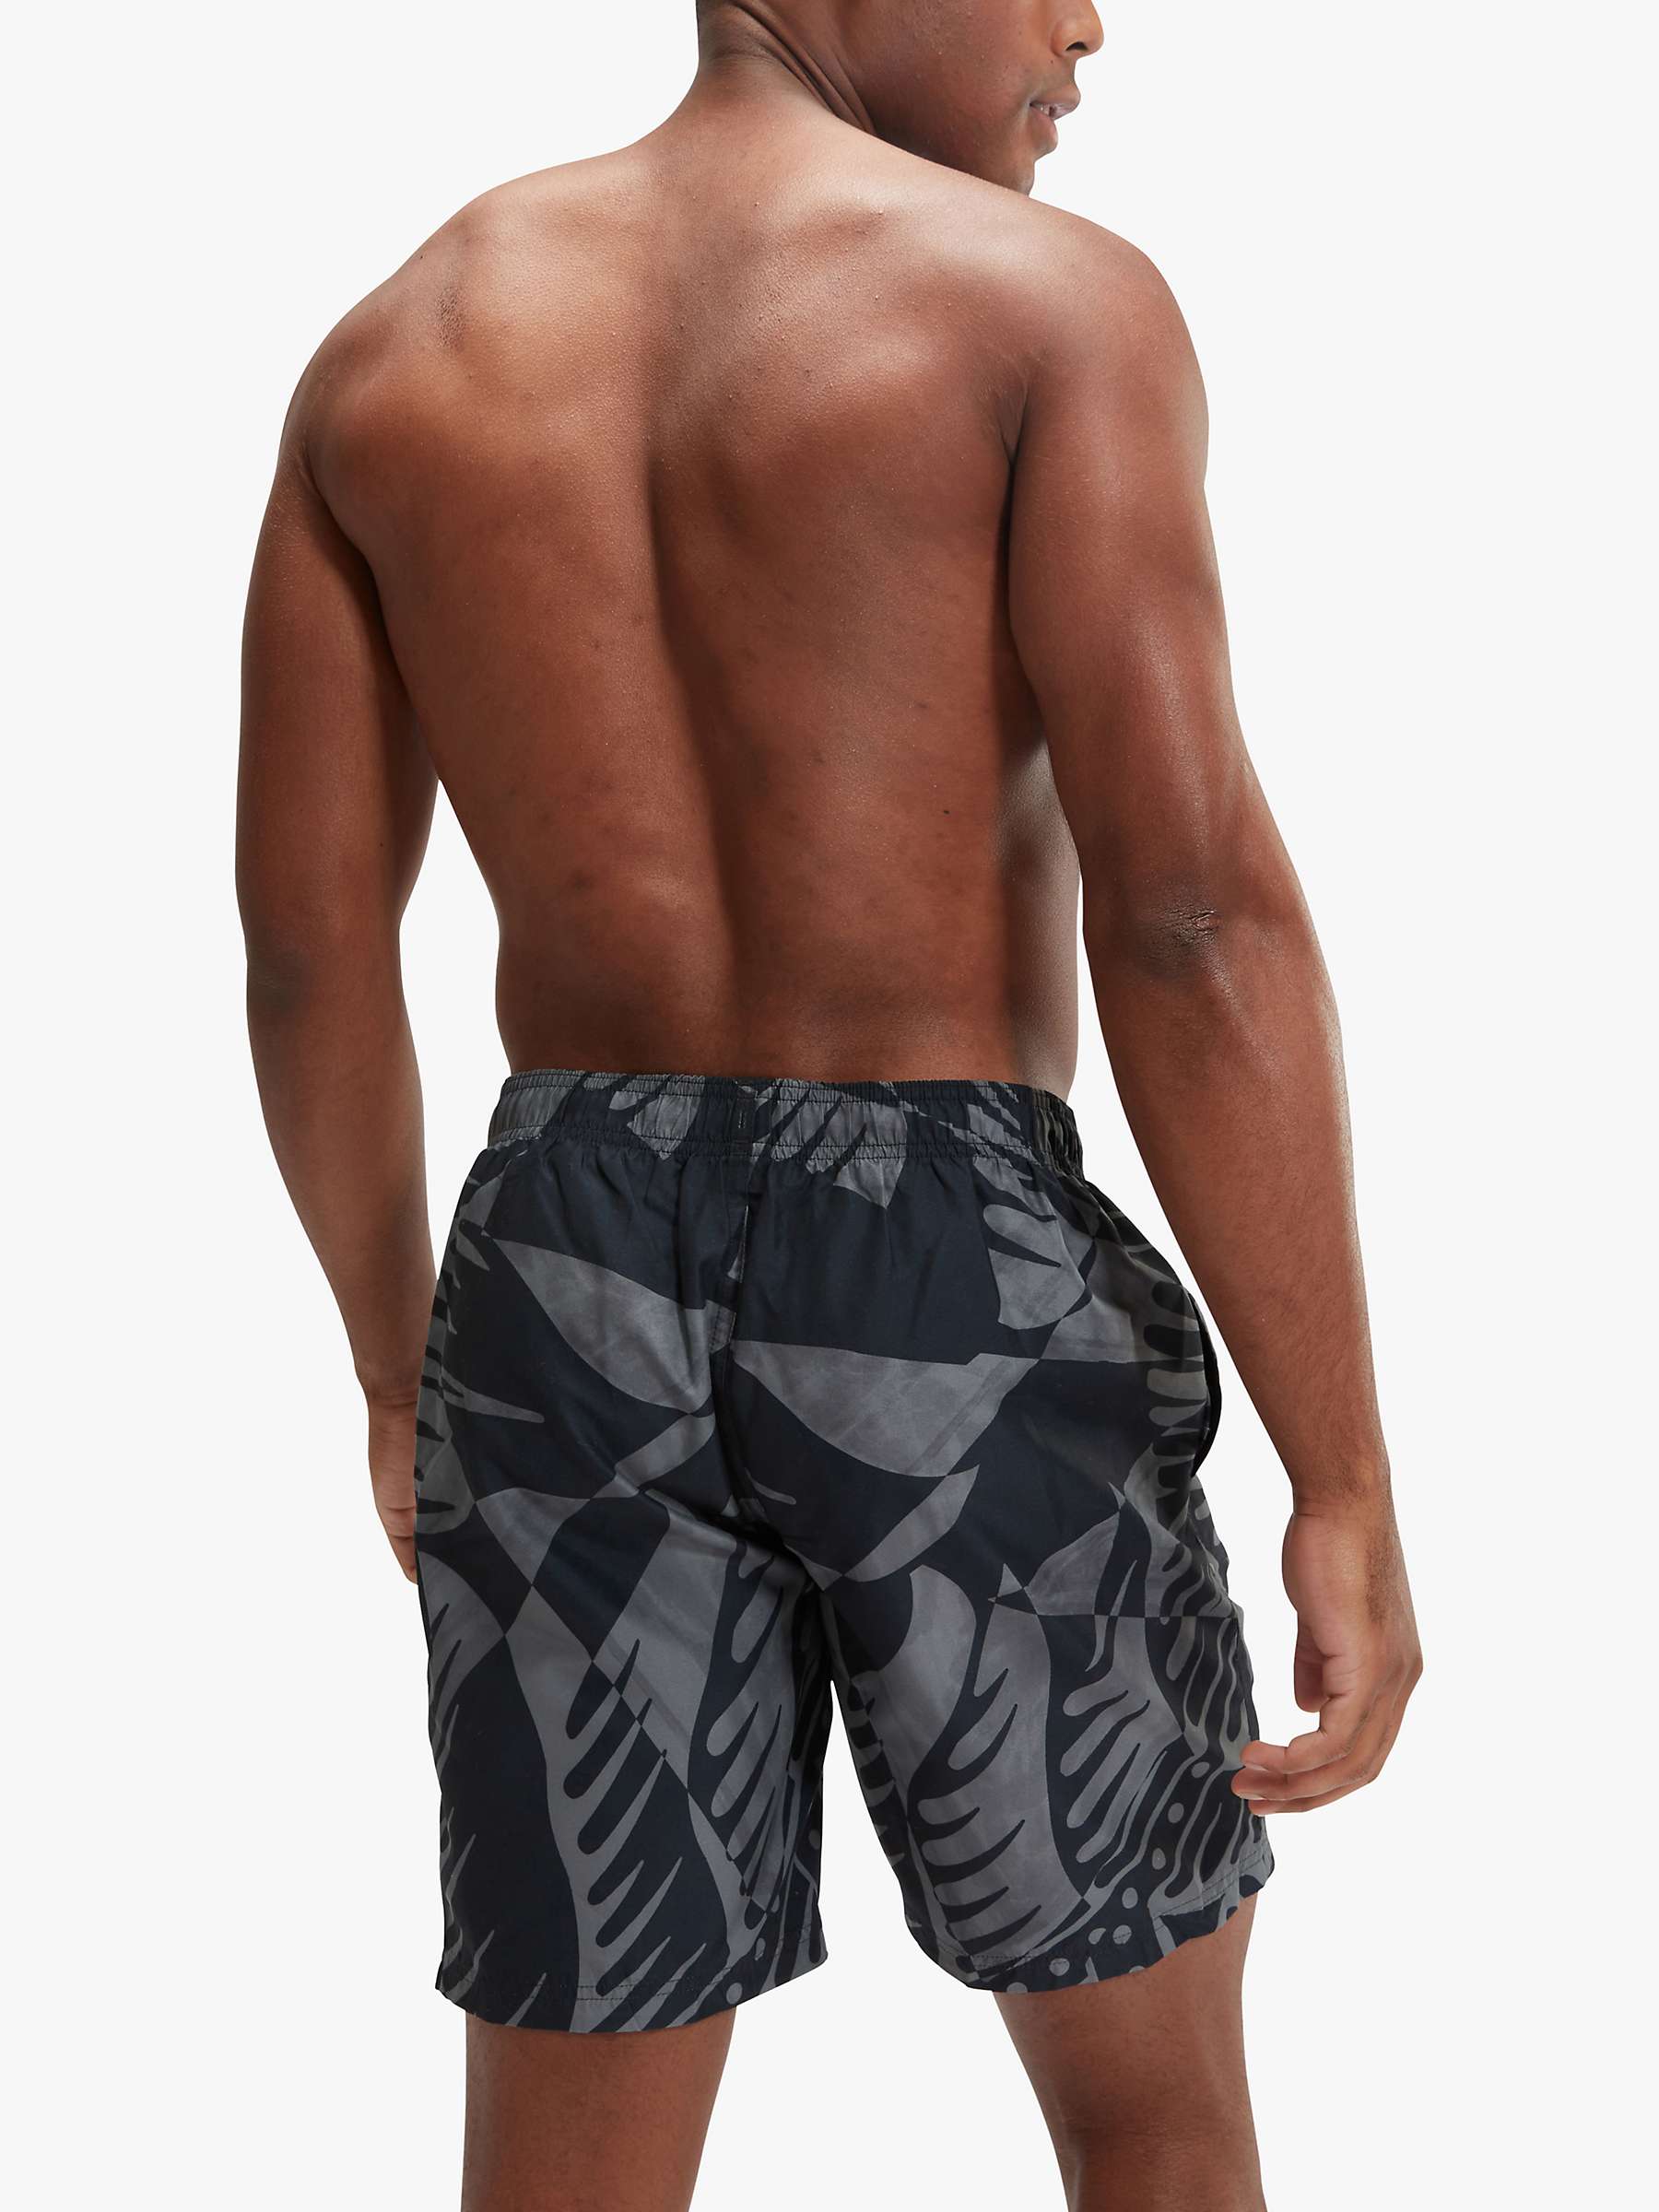 Buy Speedo Endurance+ Digital 7cm Swim Shorts, Black/Dove Grey Online at johnlewis.com